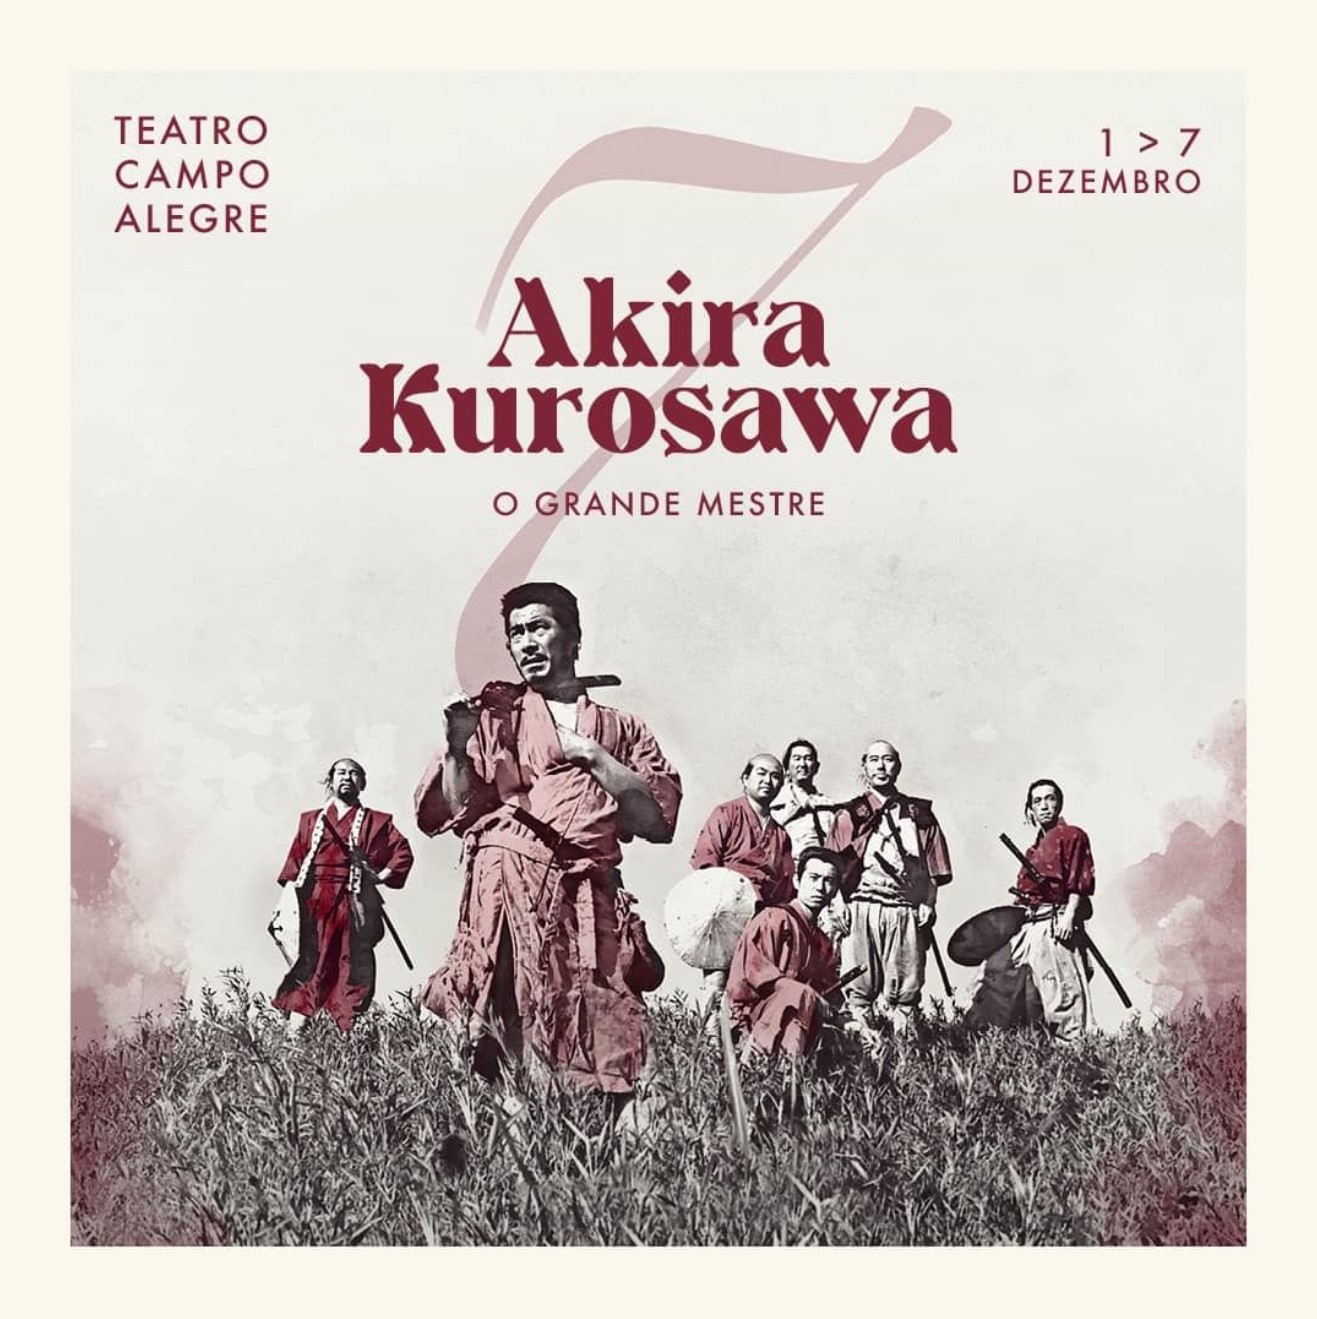 AKIRA KUROSAWA - O GRANDE MESTRE Teatro Campo Alegre